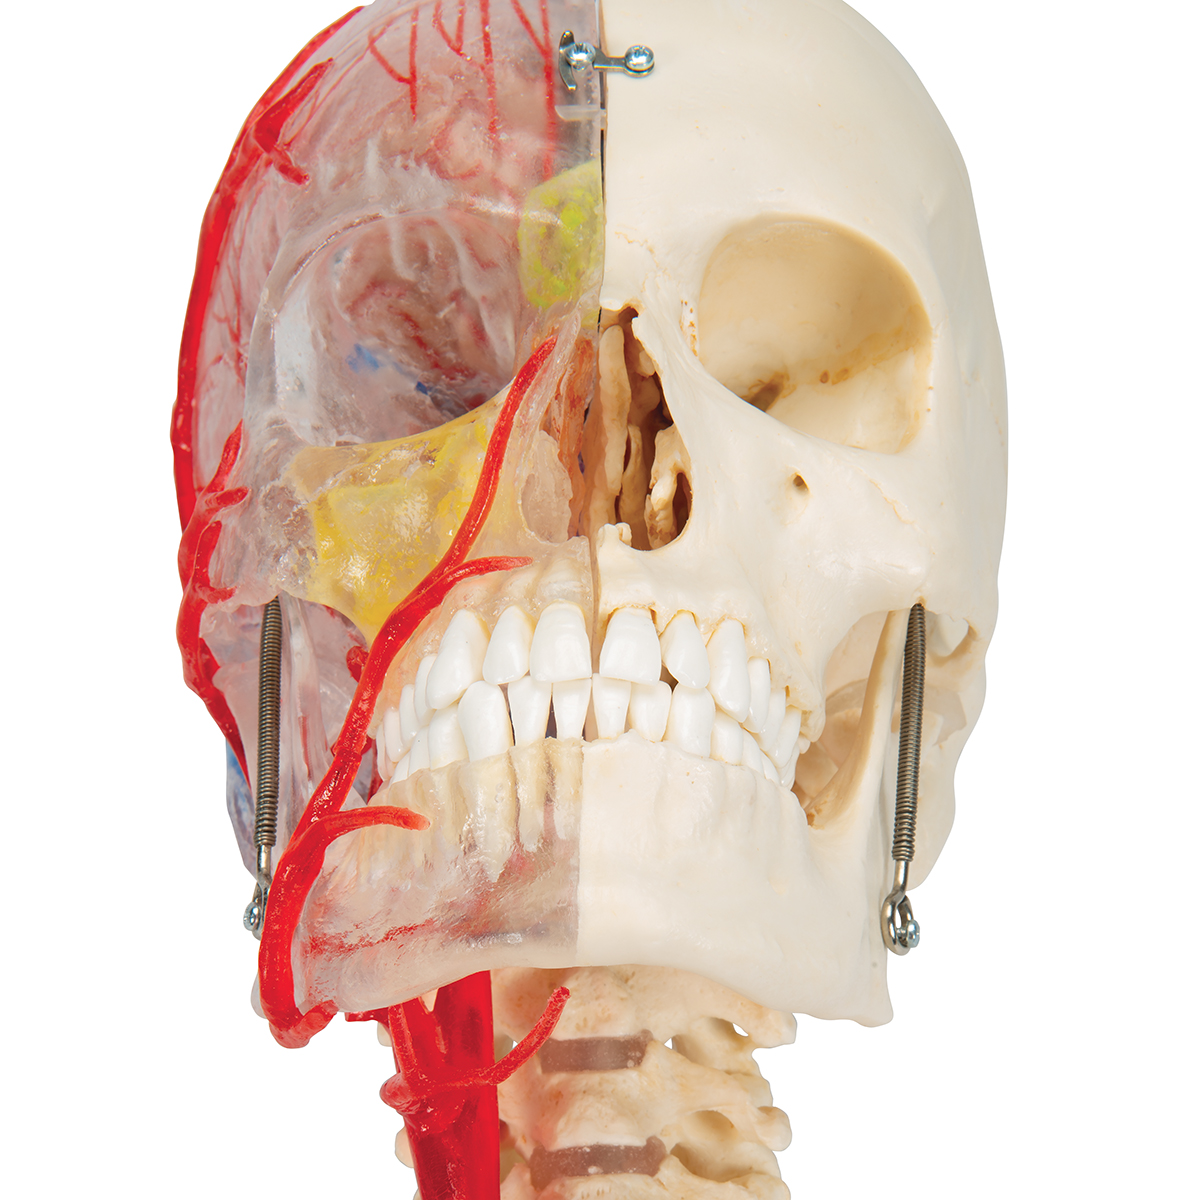 Human Skull Model - Plastic Skull Model - Realistic BONElike Human